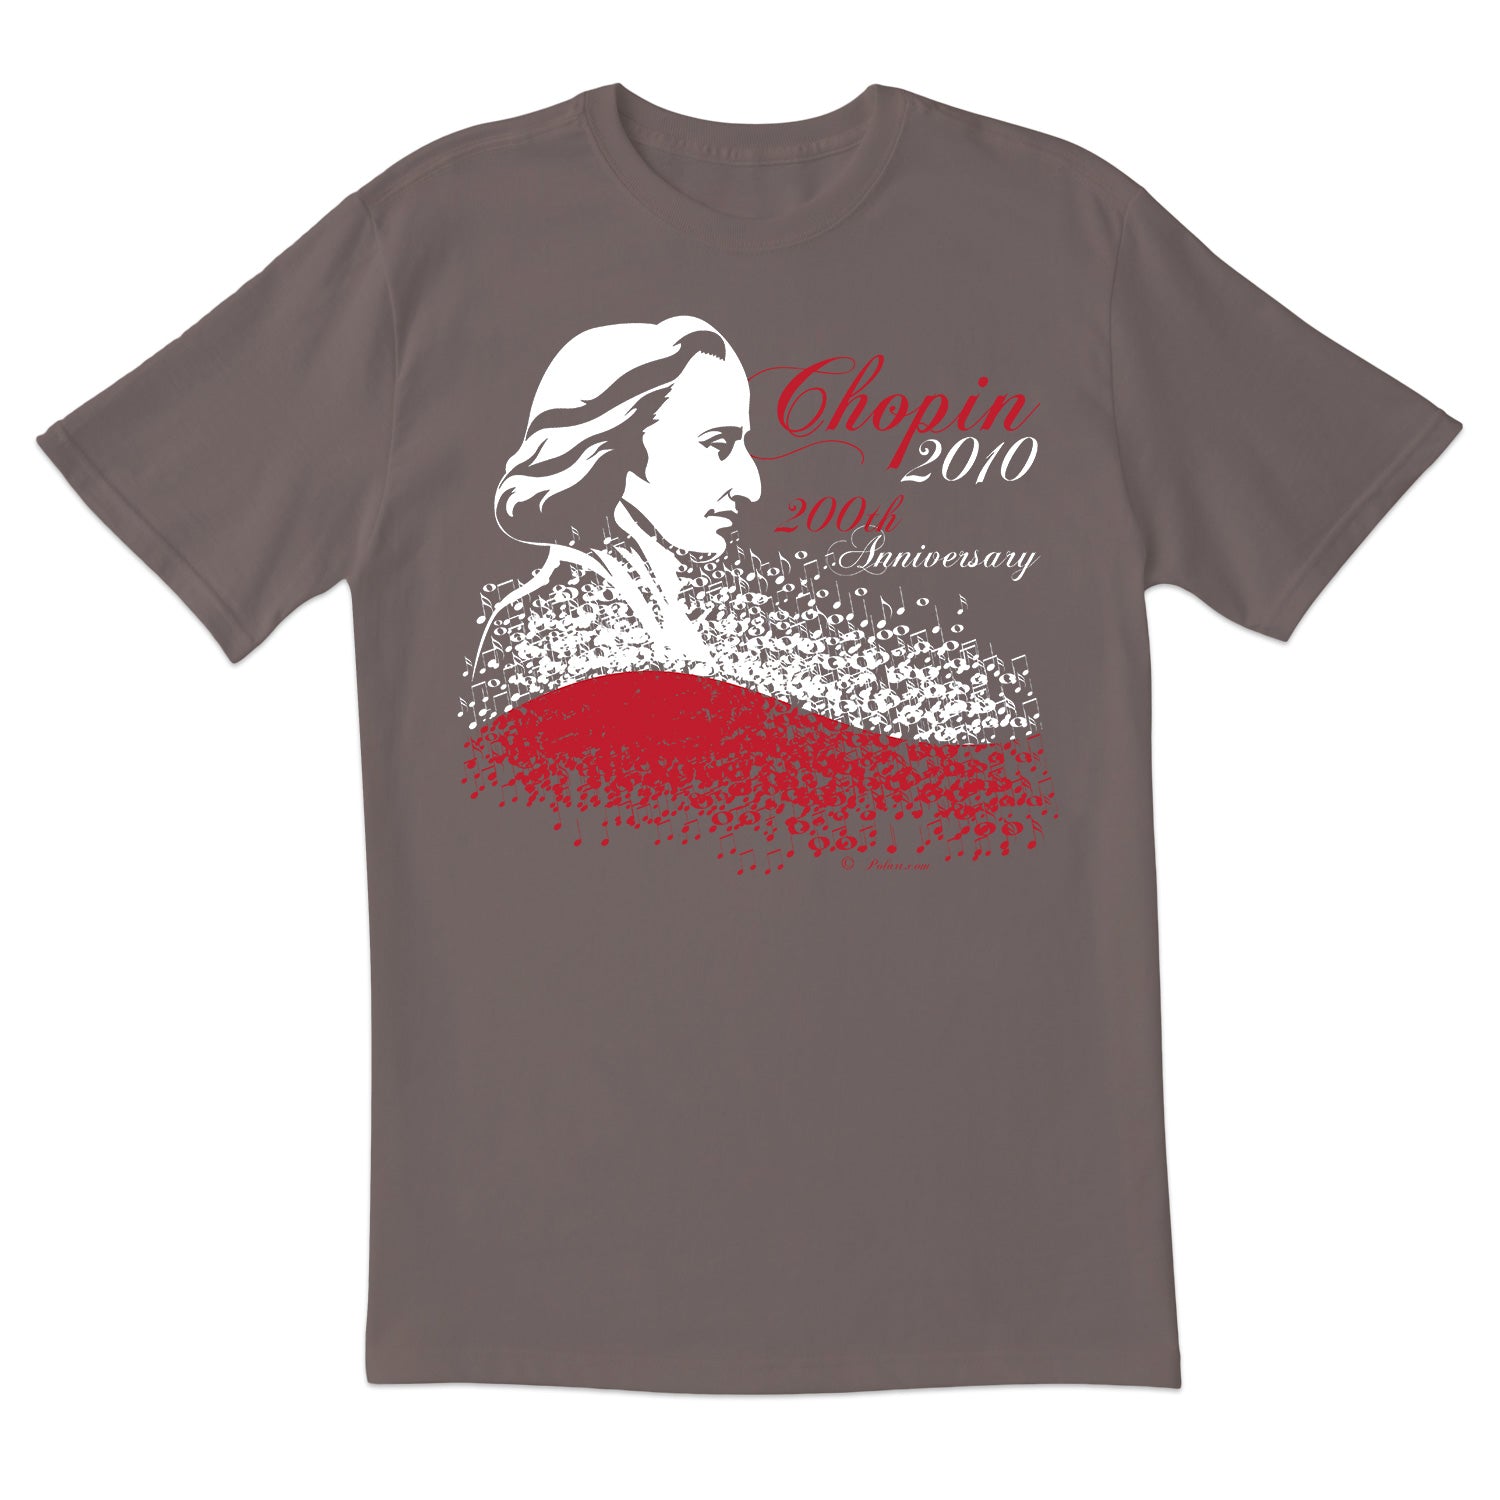 Chopin 200th Anniversary Short Sleeve Tshirt